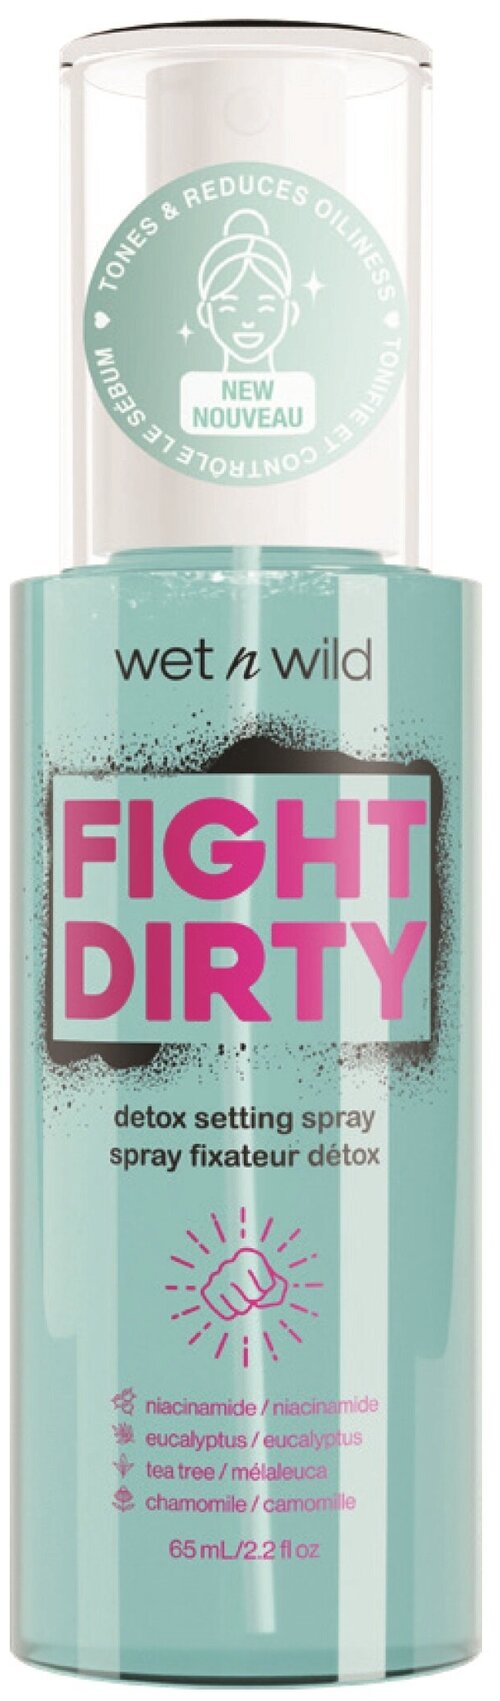 Wet n Wild Спрей для фиксации макияжа Fight Dirty Detox Setting Spray, 65 мл, прозрачный